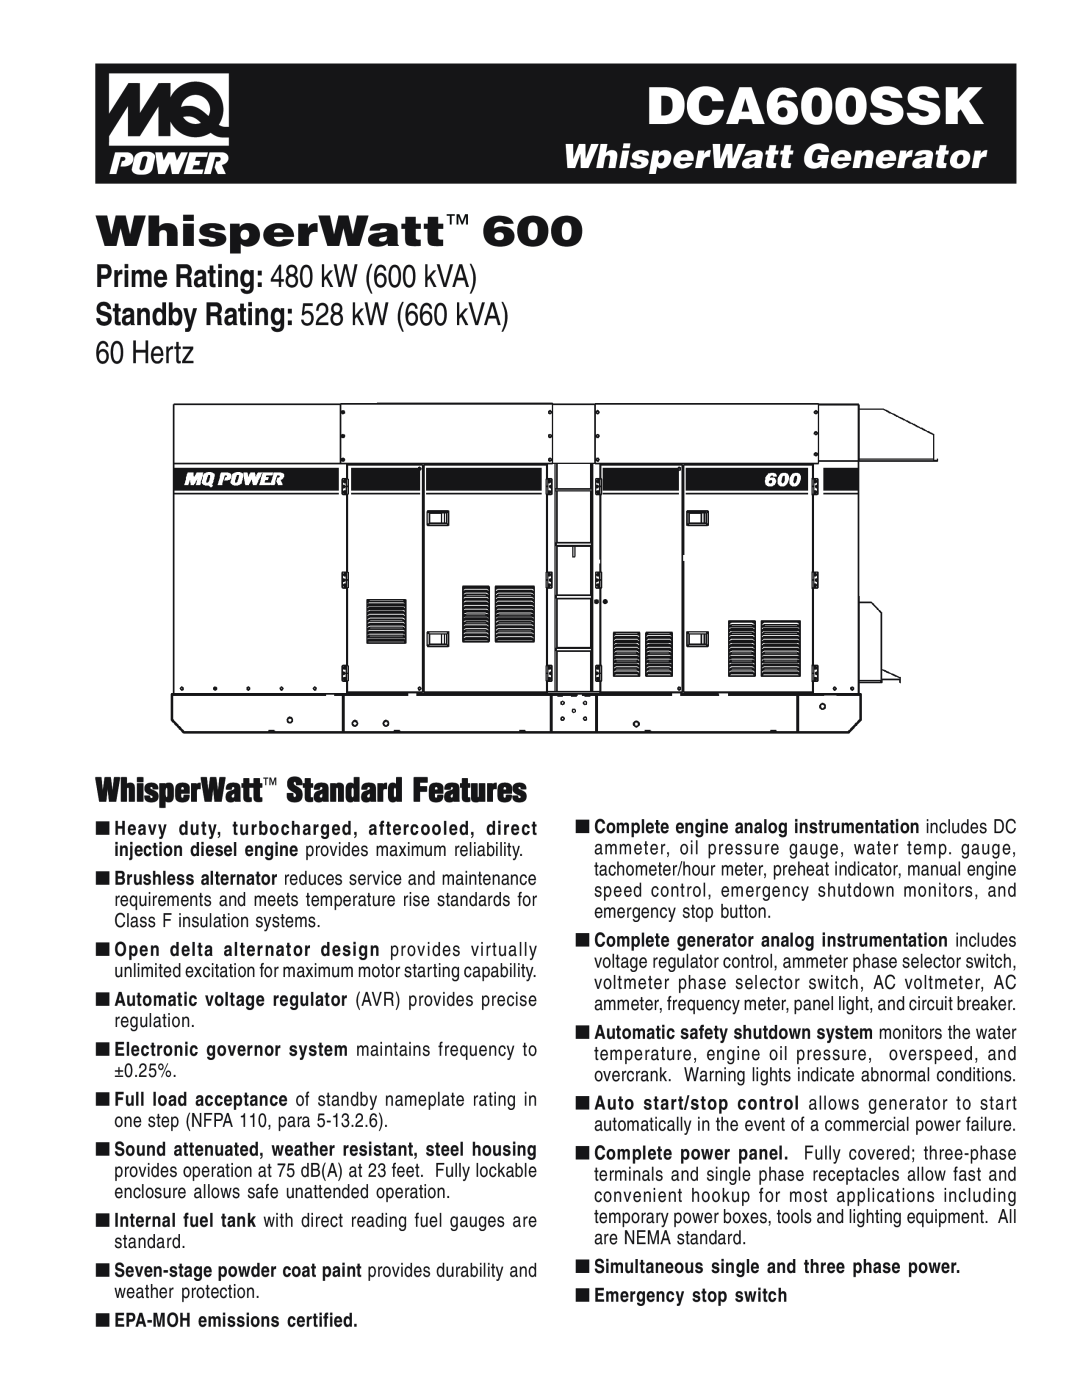 Multiquip DCA600SSK manual WhisperWatt Generator, Prime Rating 480 kW 600 kVA, Hertz, WhisperWatt Standard Features 